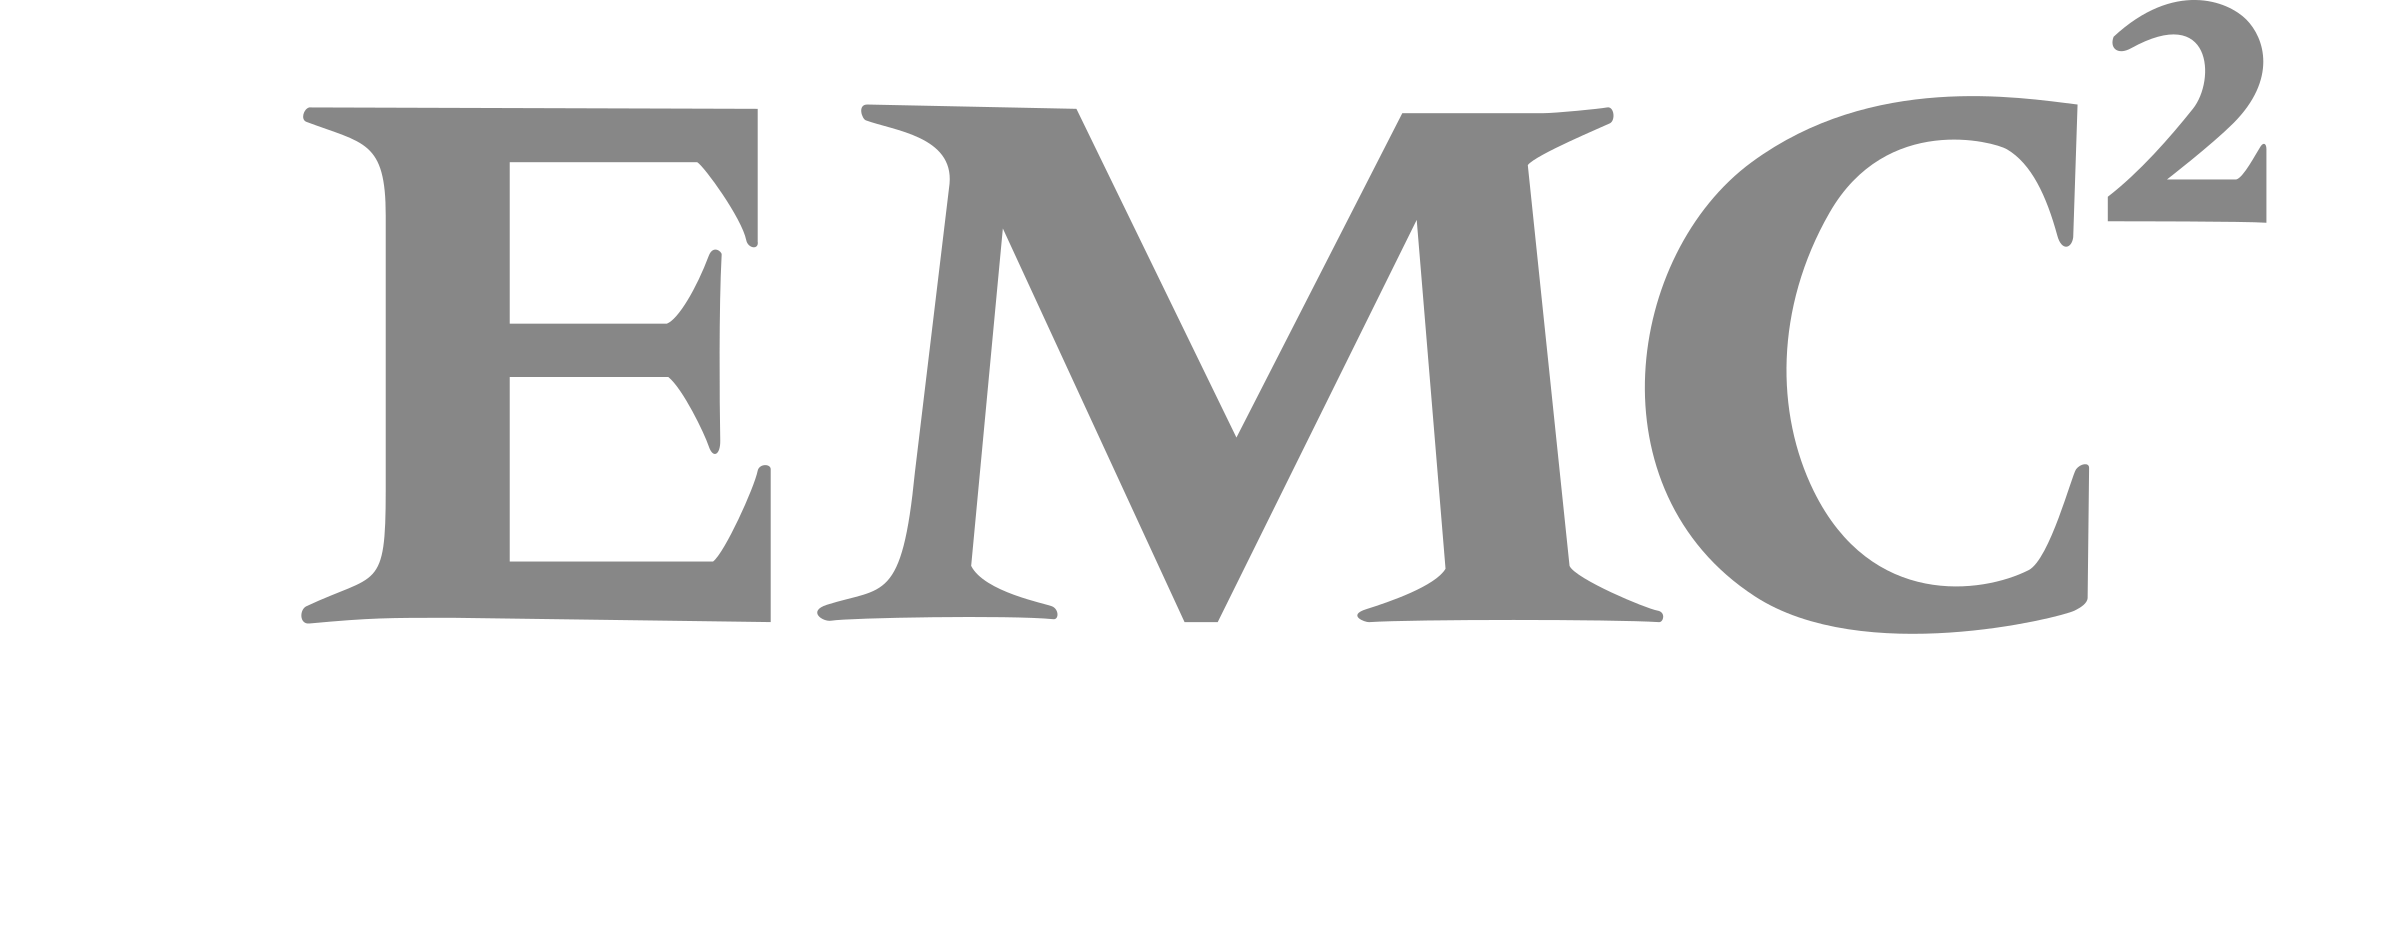 EMC2 logo.png